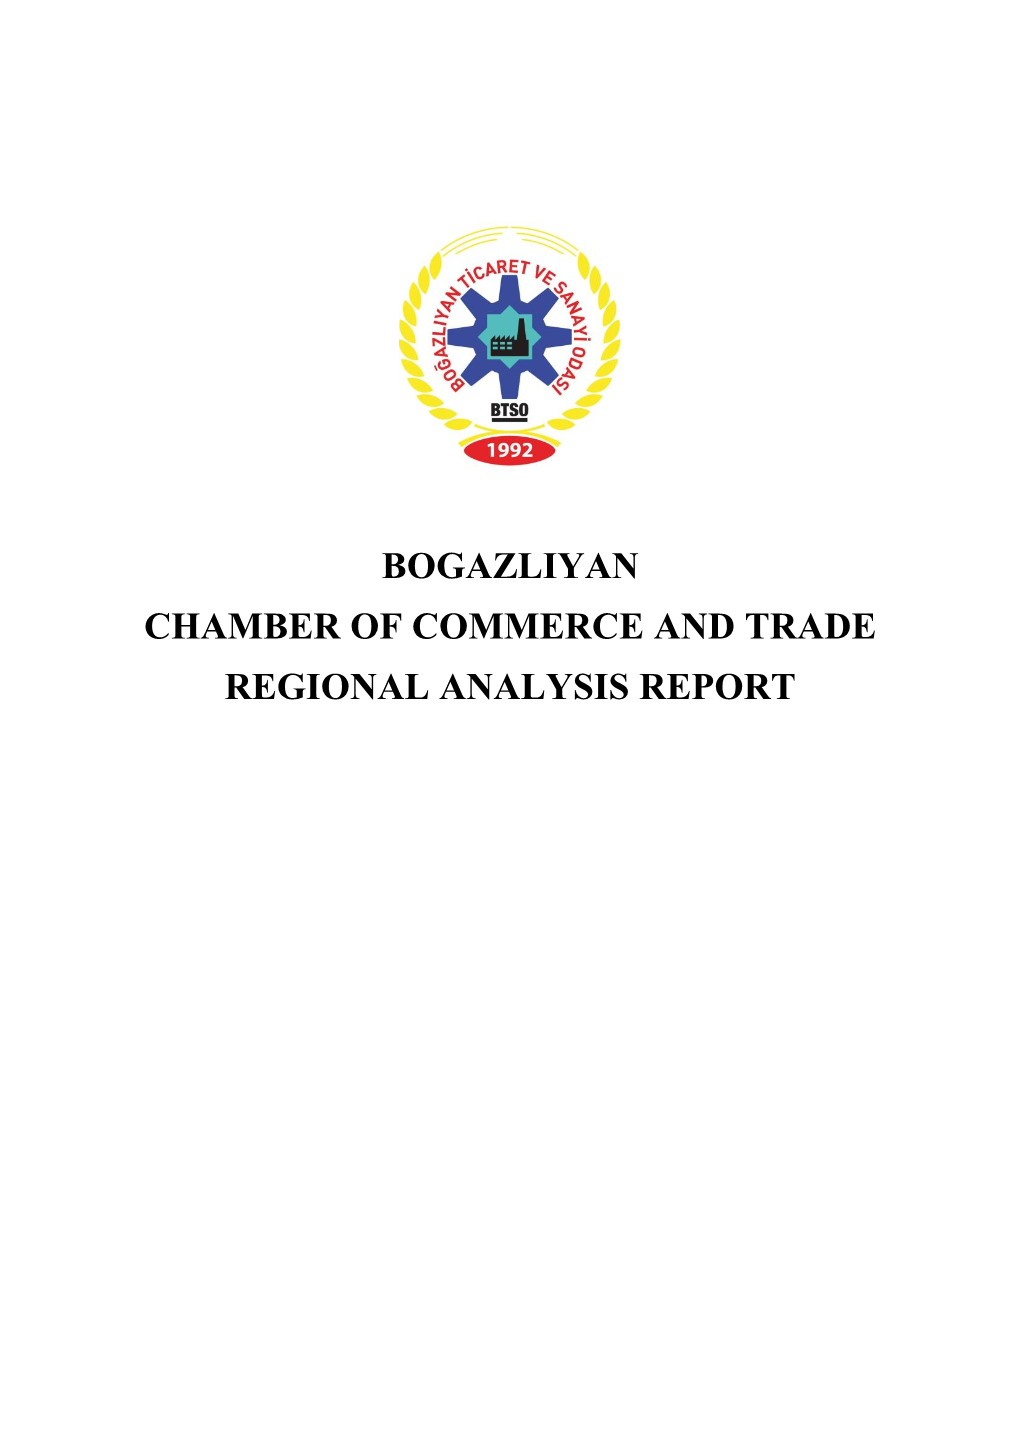 Bogazliyan Chamber of Commerce and Trade Regional Analysis Report